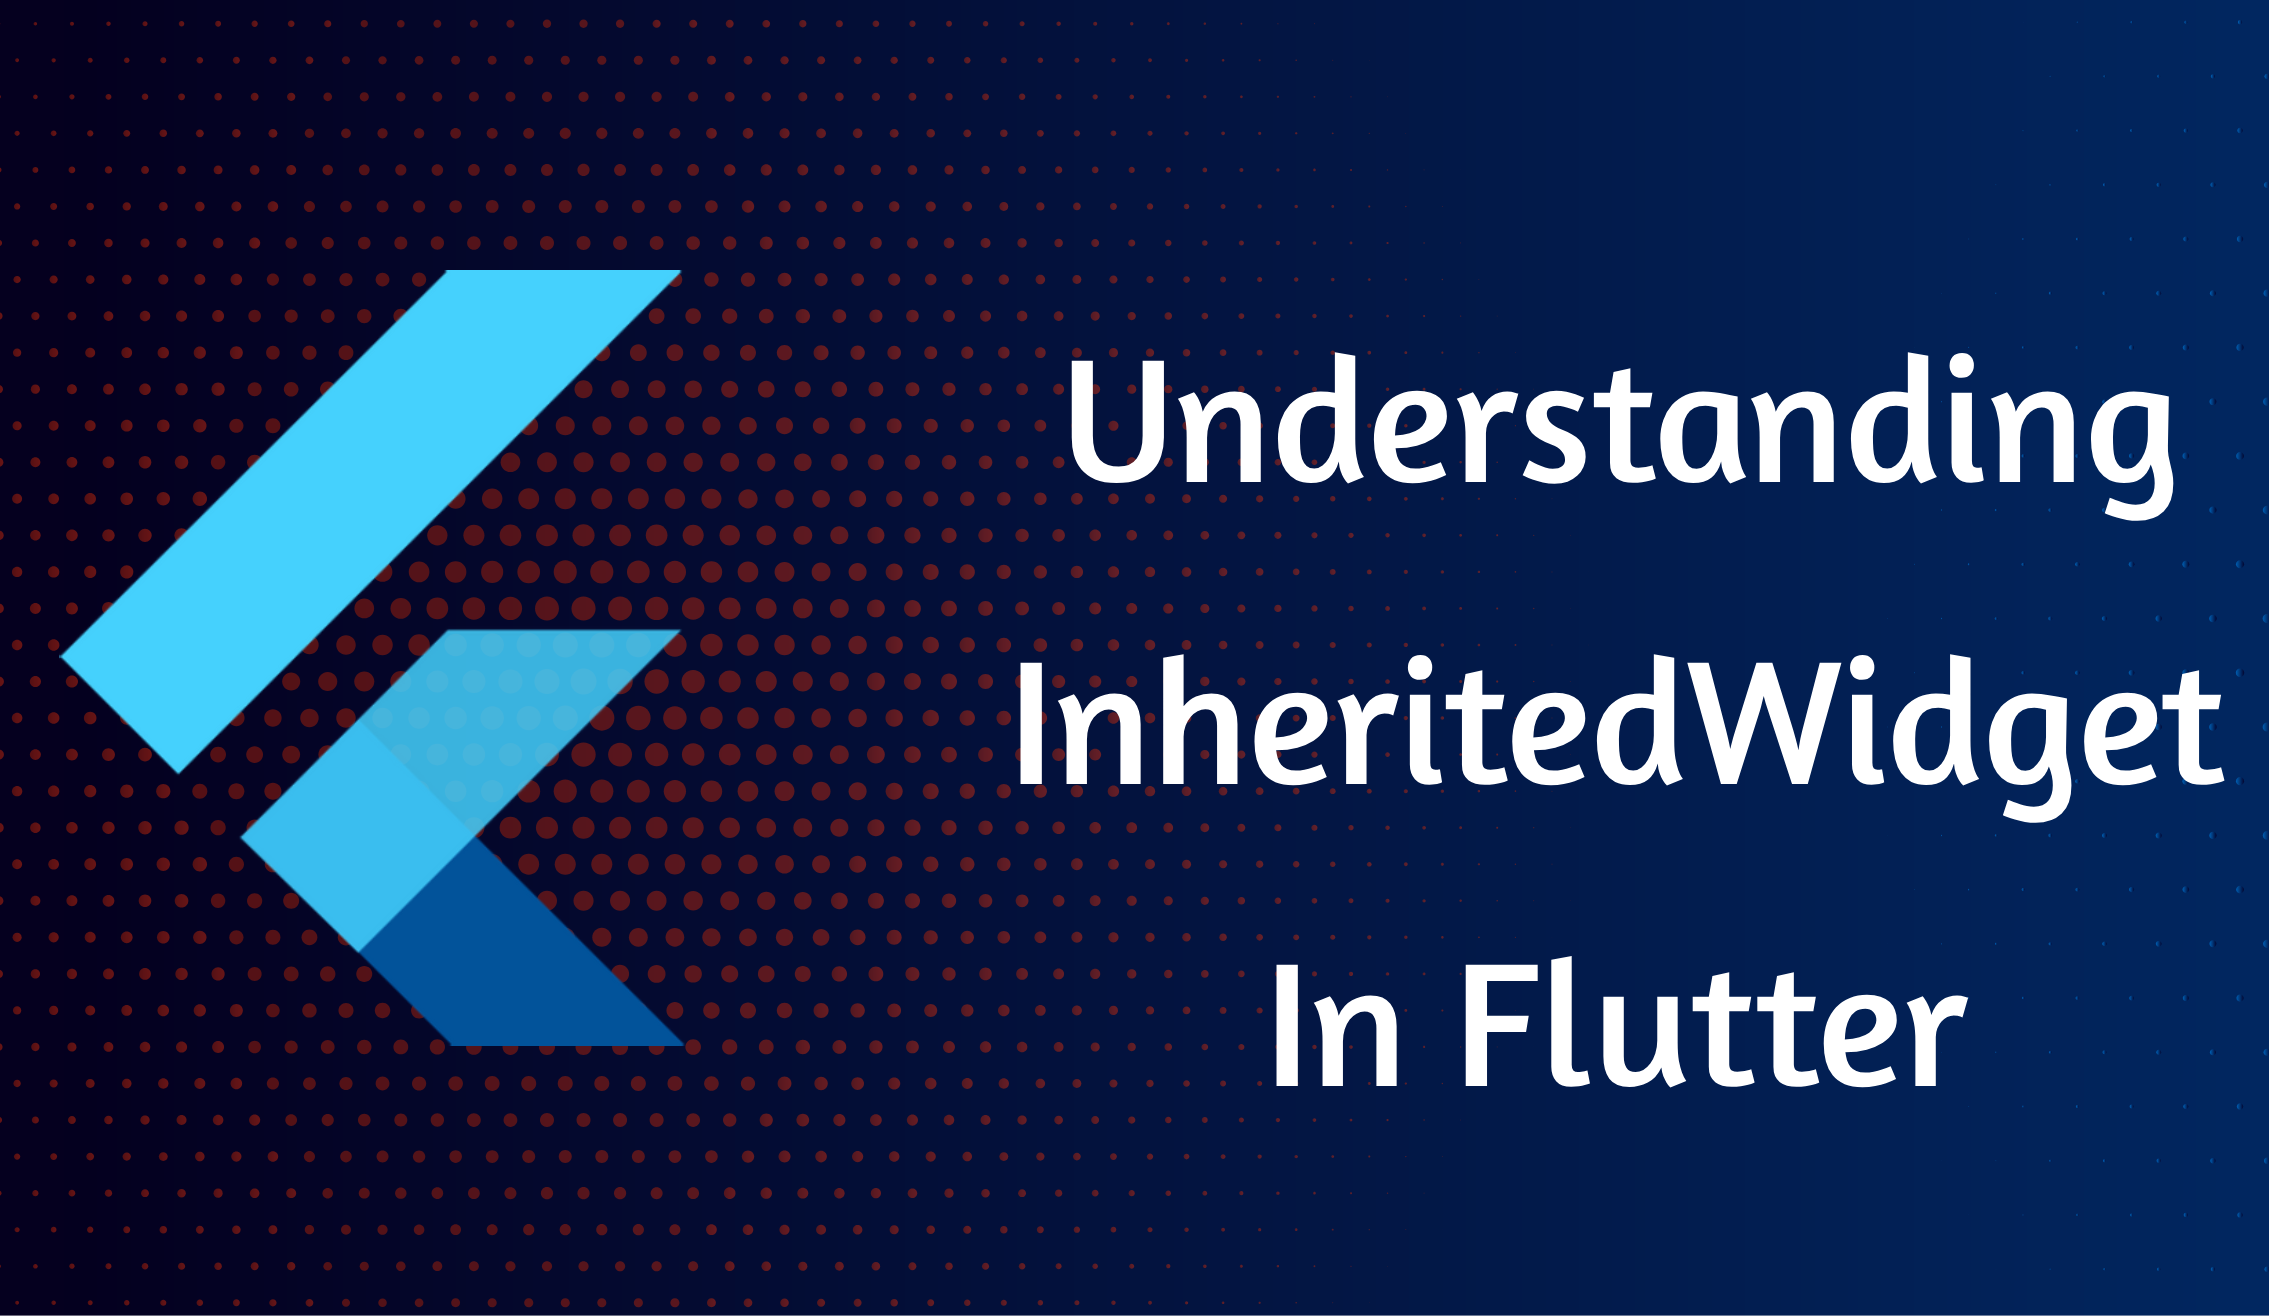 inherited widget in flutter app